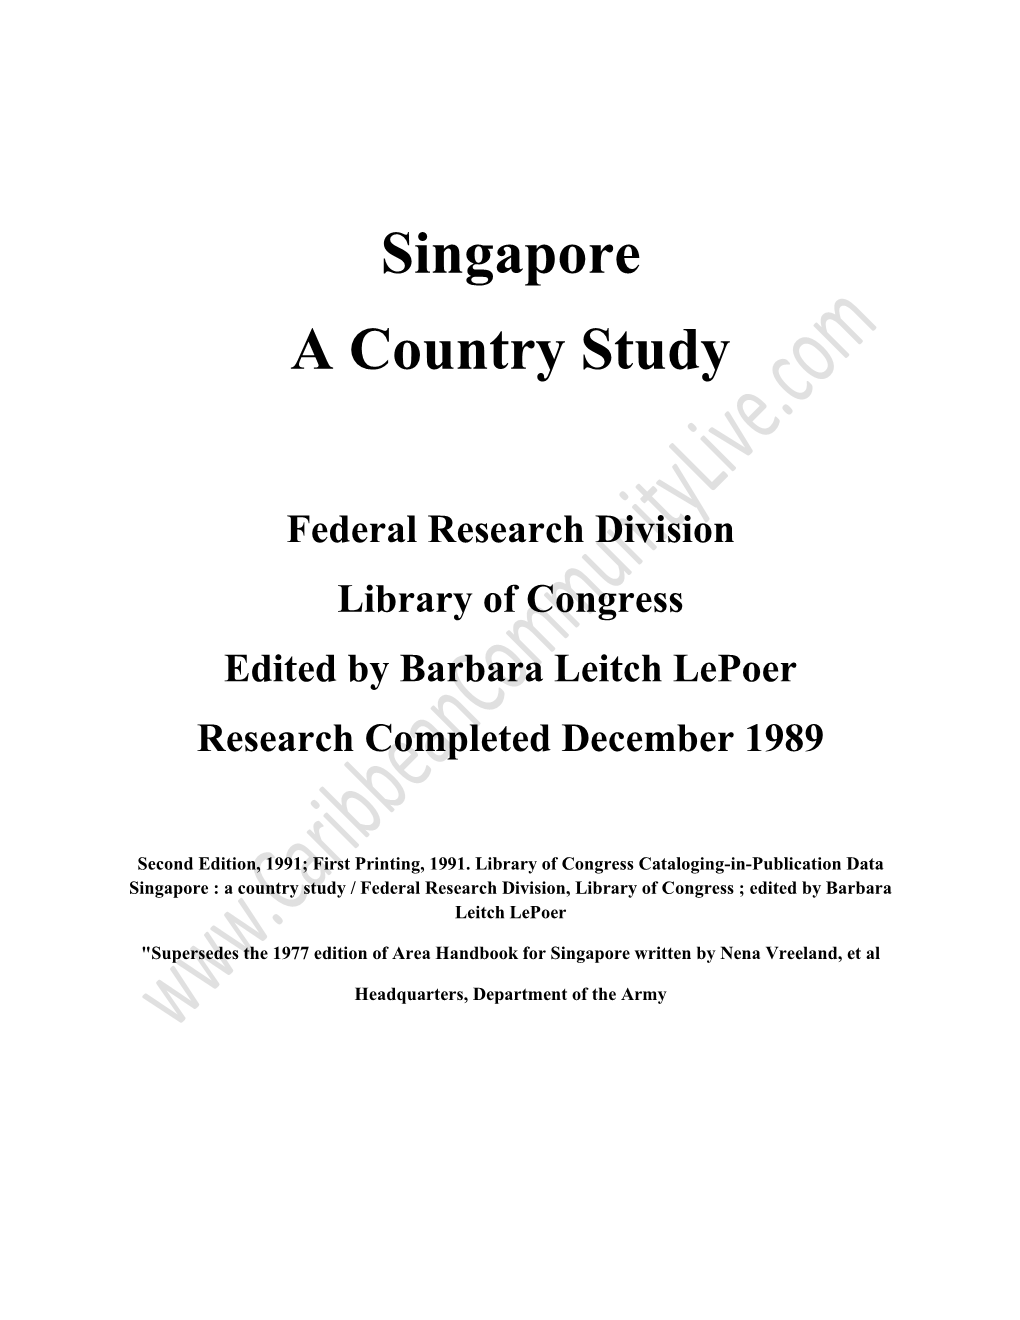 Singapore a Country Study